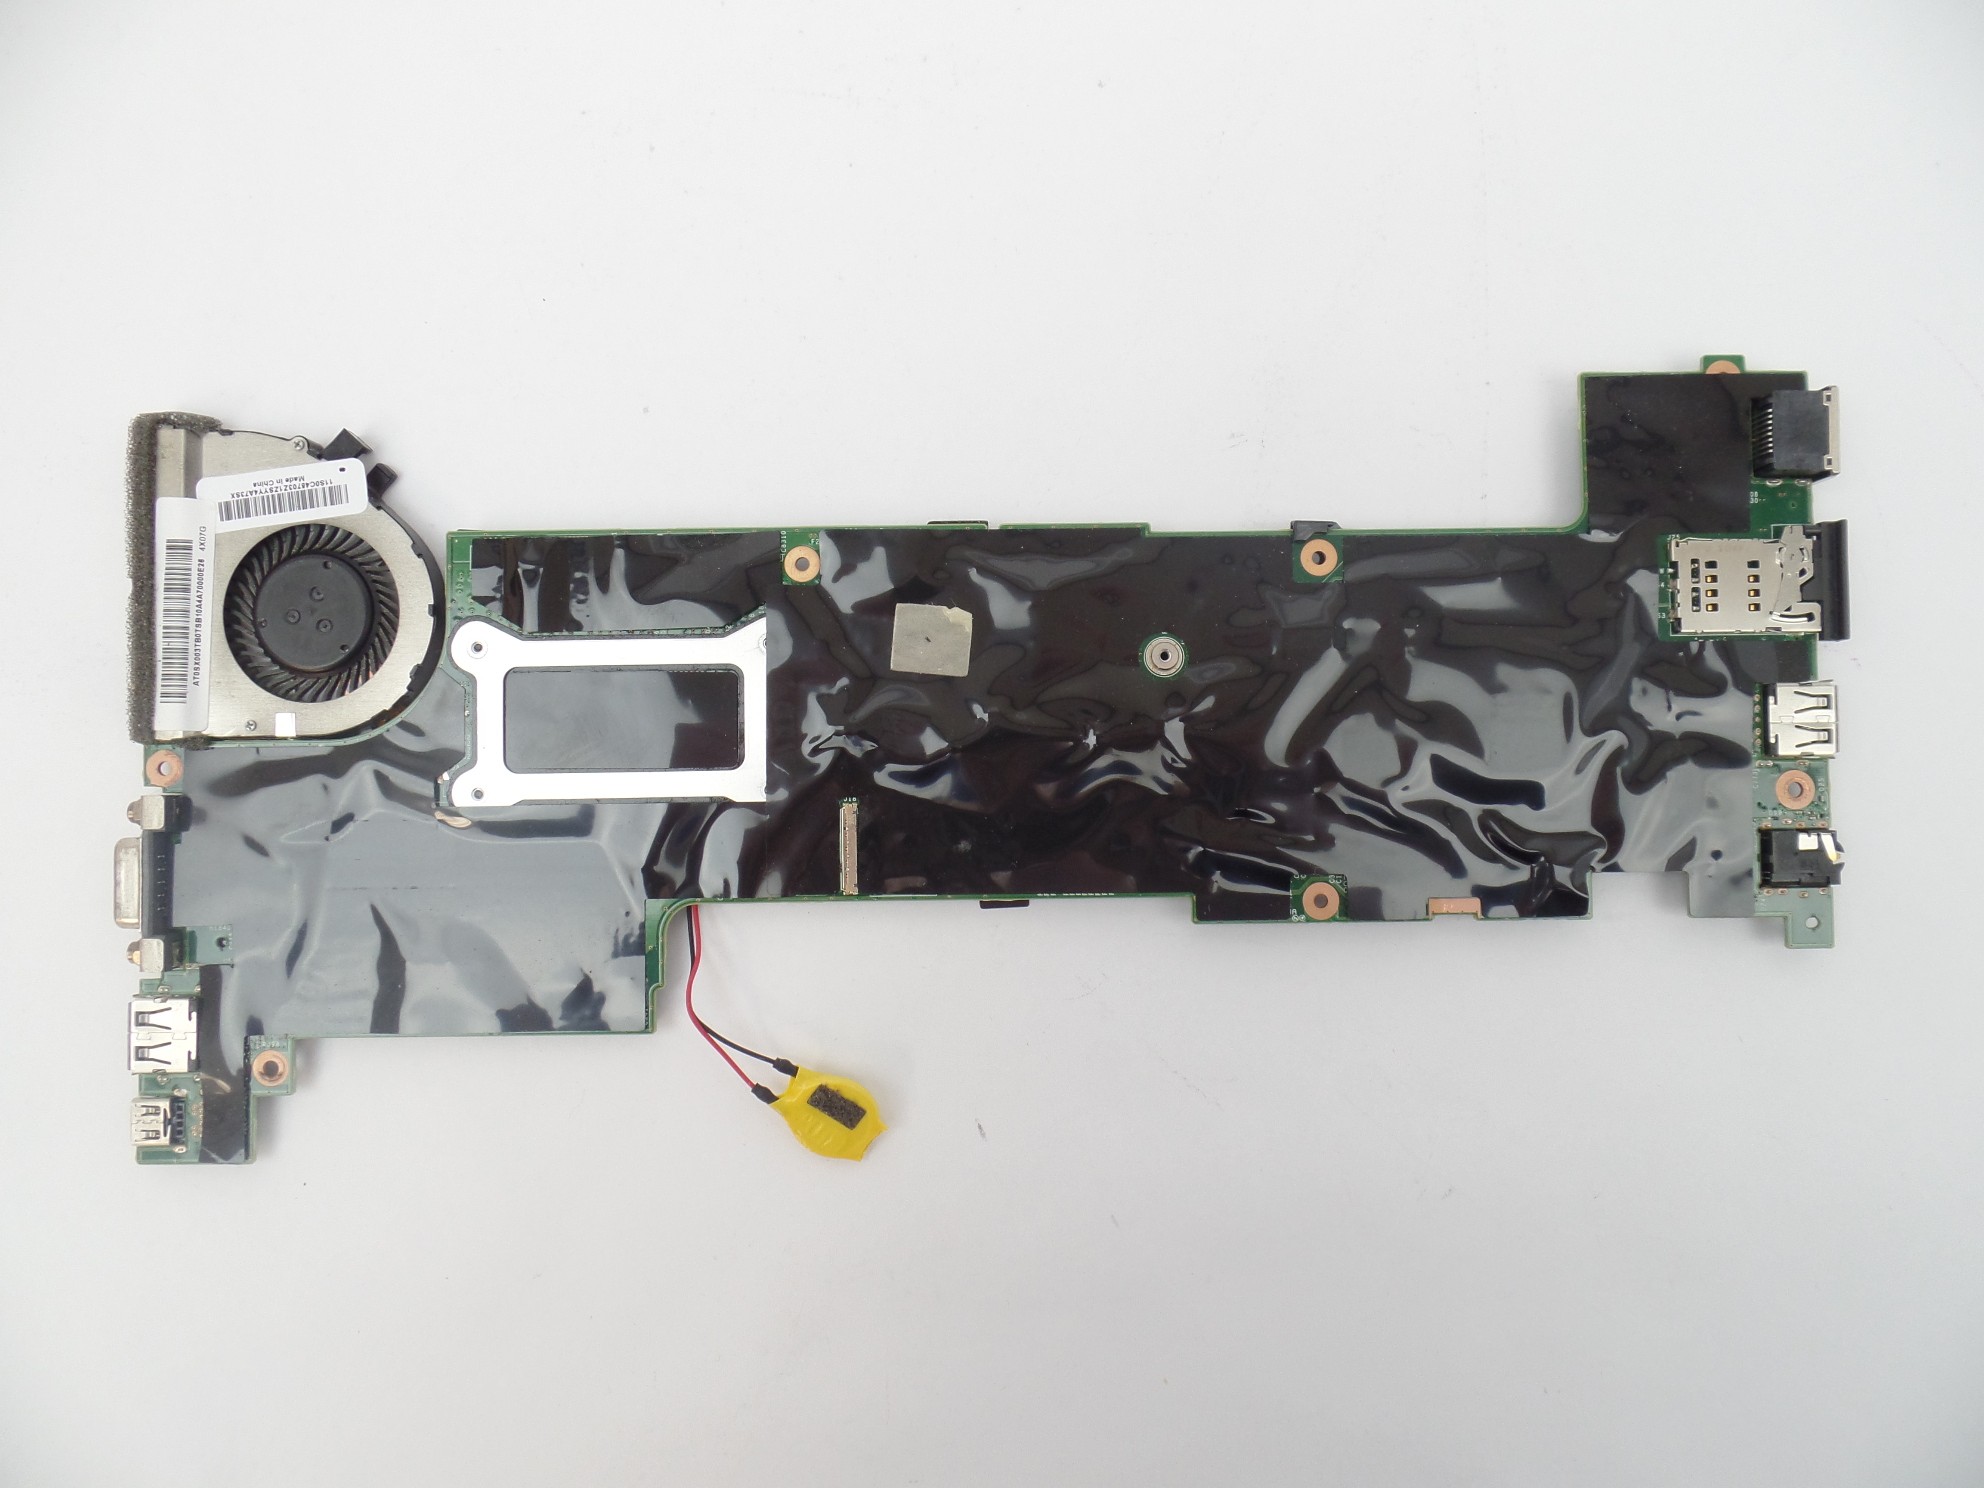 OEM Motherboard VIUX2 + Fan + USB fits Lenovo x240 i7-4600U 2.1GHz 04X5166 20AM